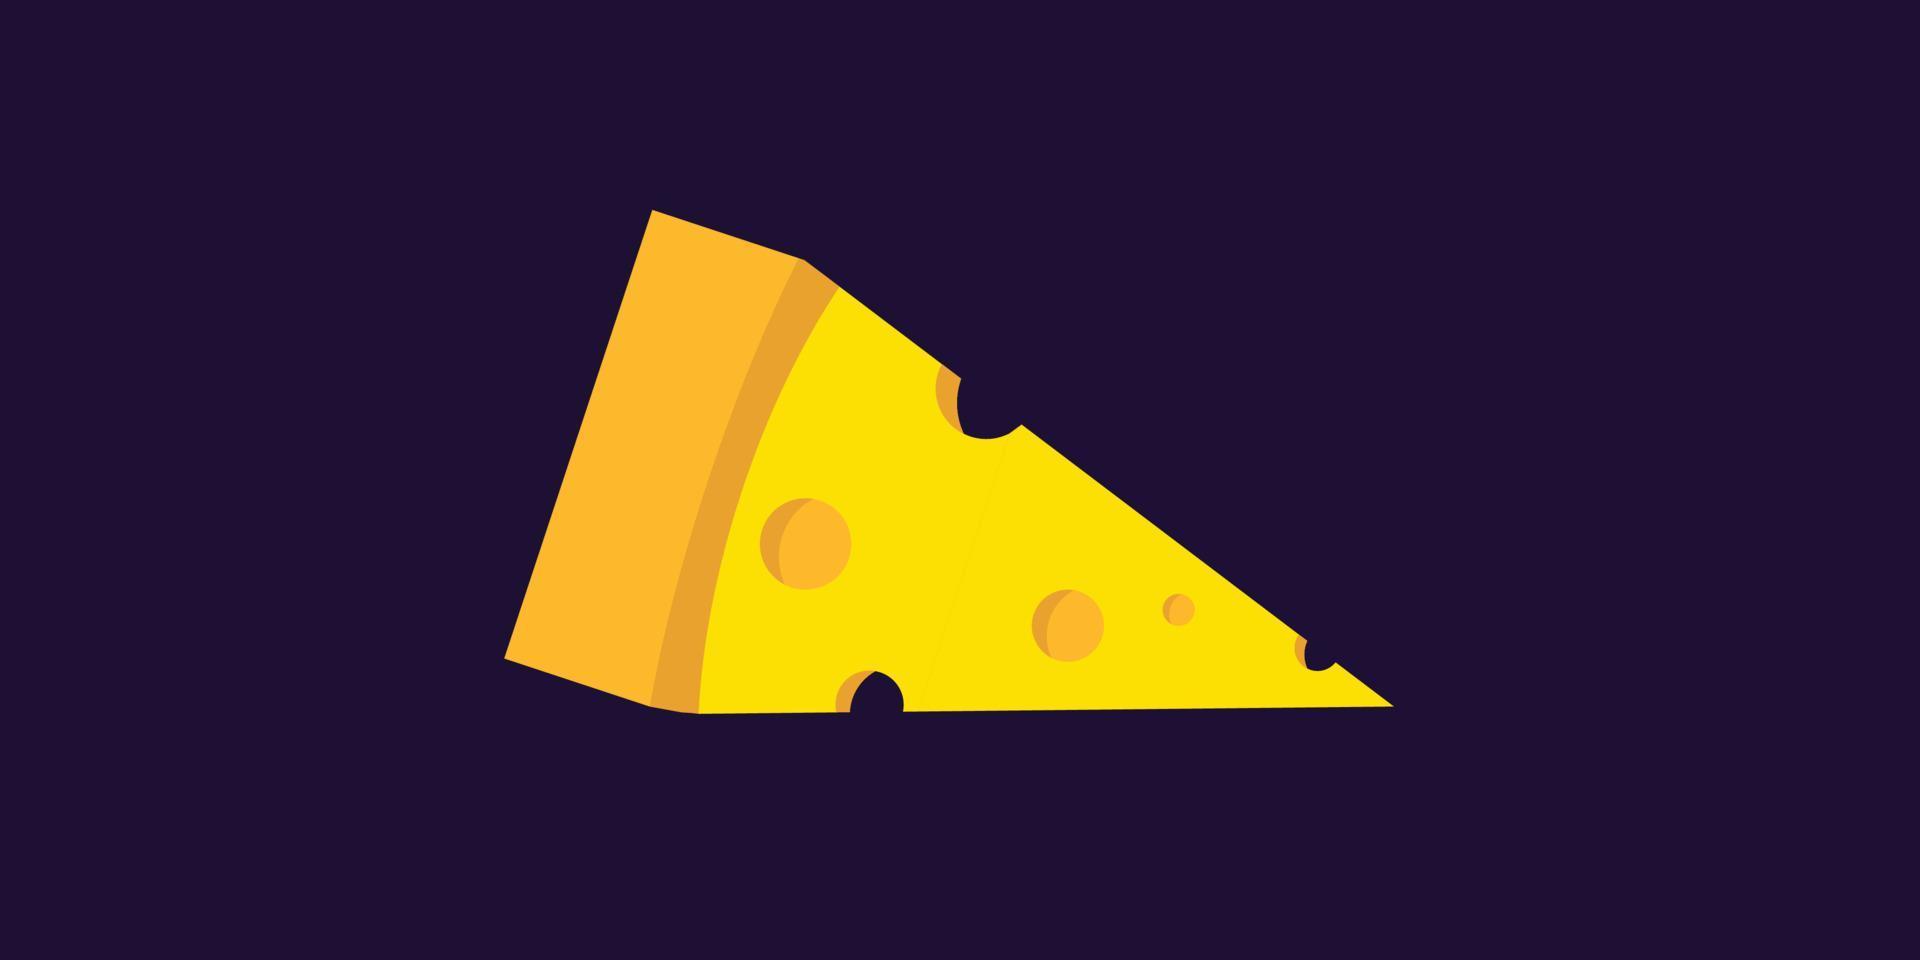 isolation yellow triangular piece of cheese vector icon illustration purple background eps